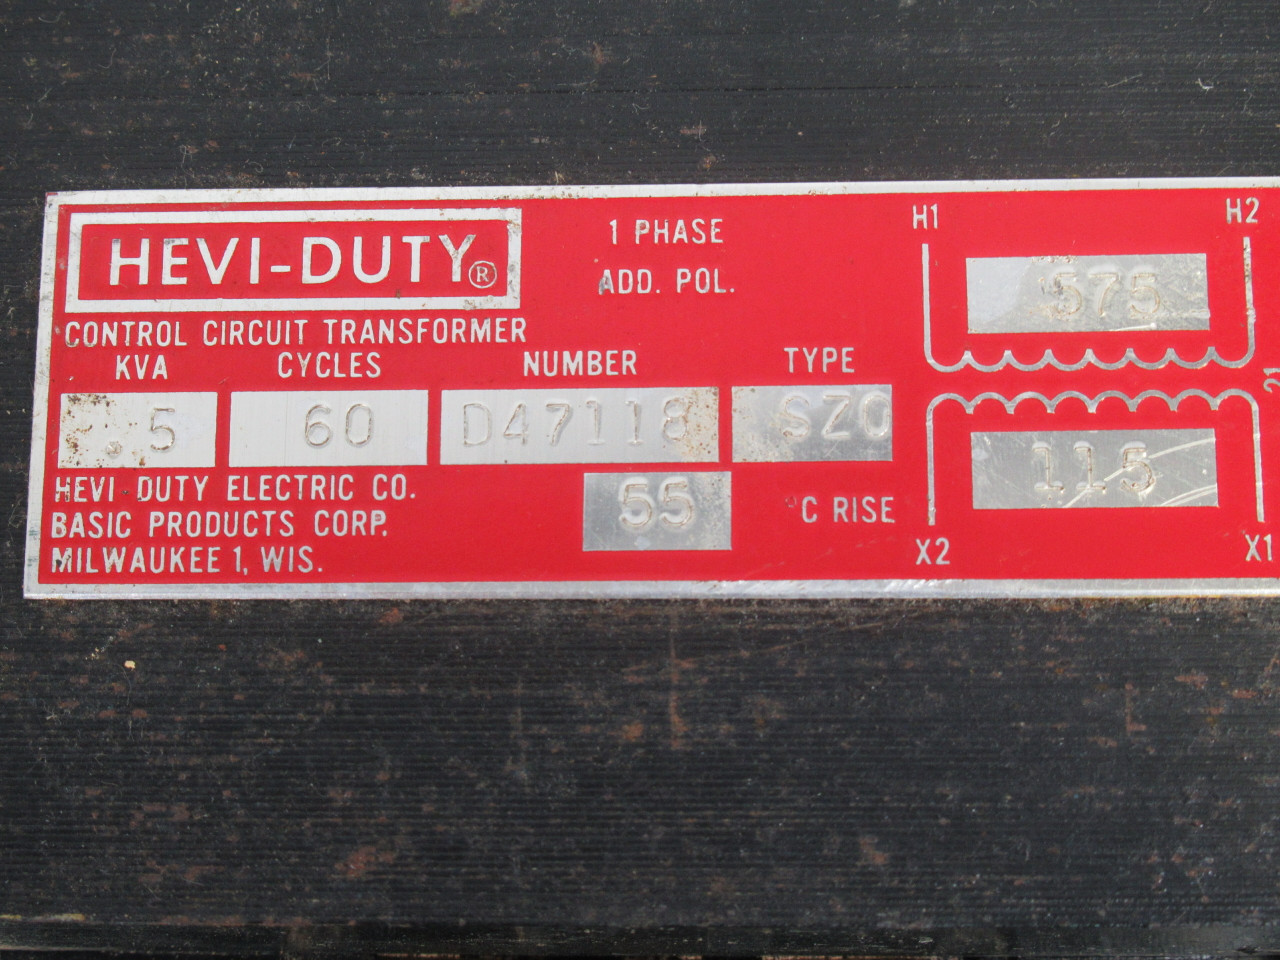 Hevi-Duty D47118 Control Circuit Transformer 0.5kVA Pri.575V Sec.115V USED